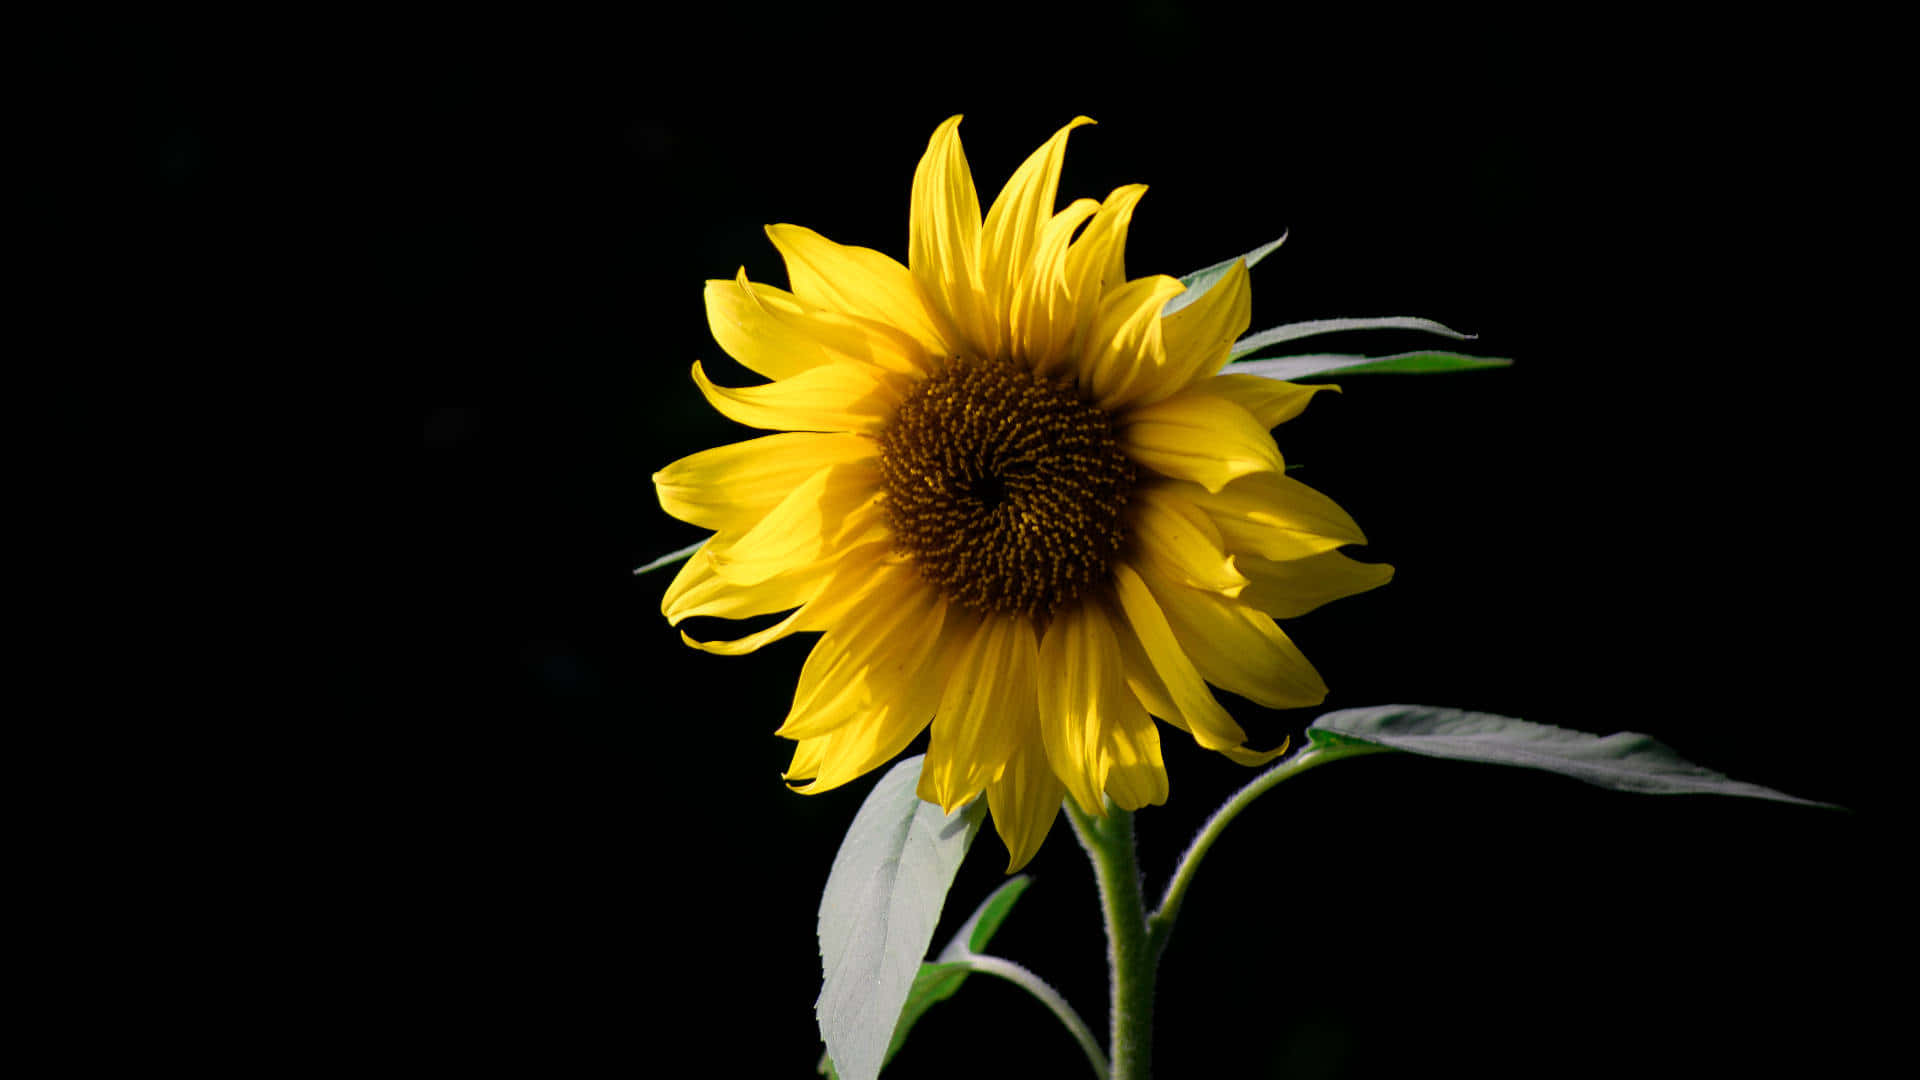 A dark sunflower in the sun Wallpaper